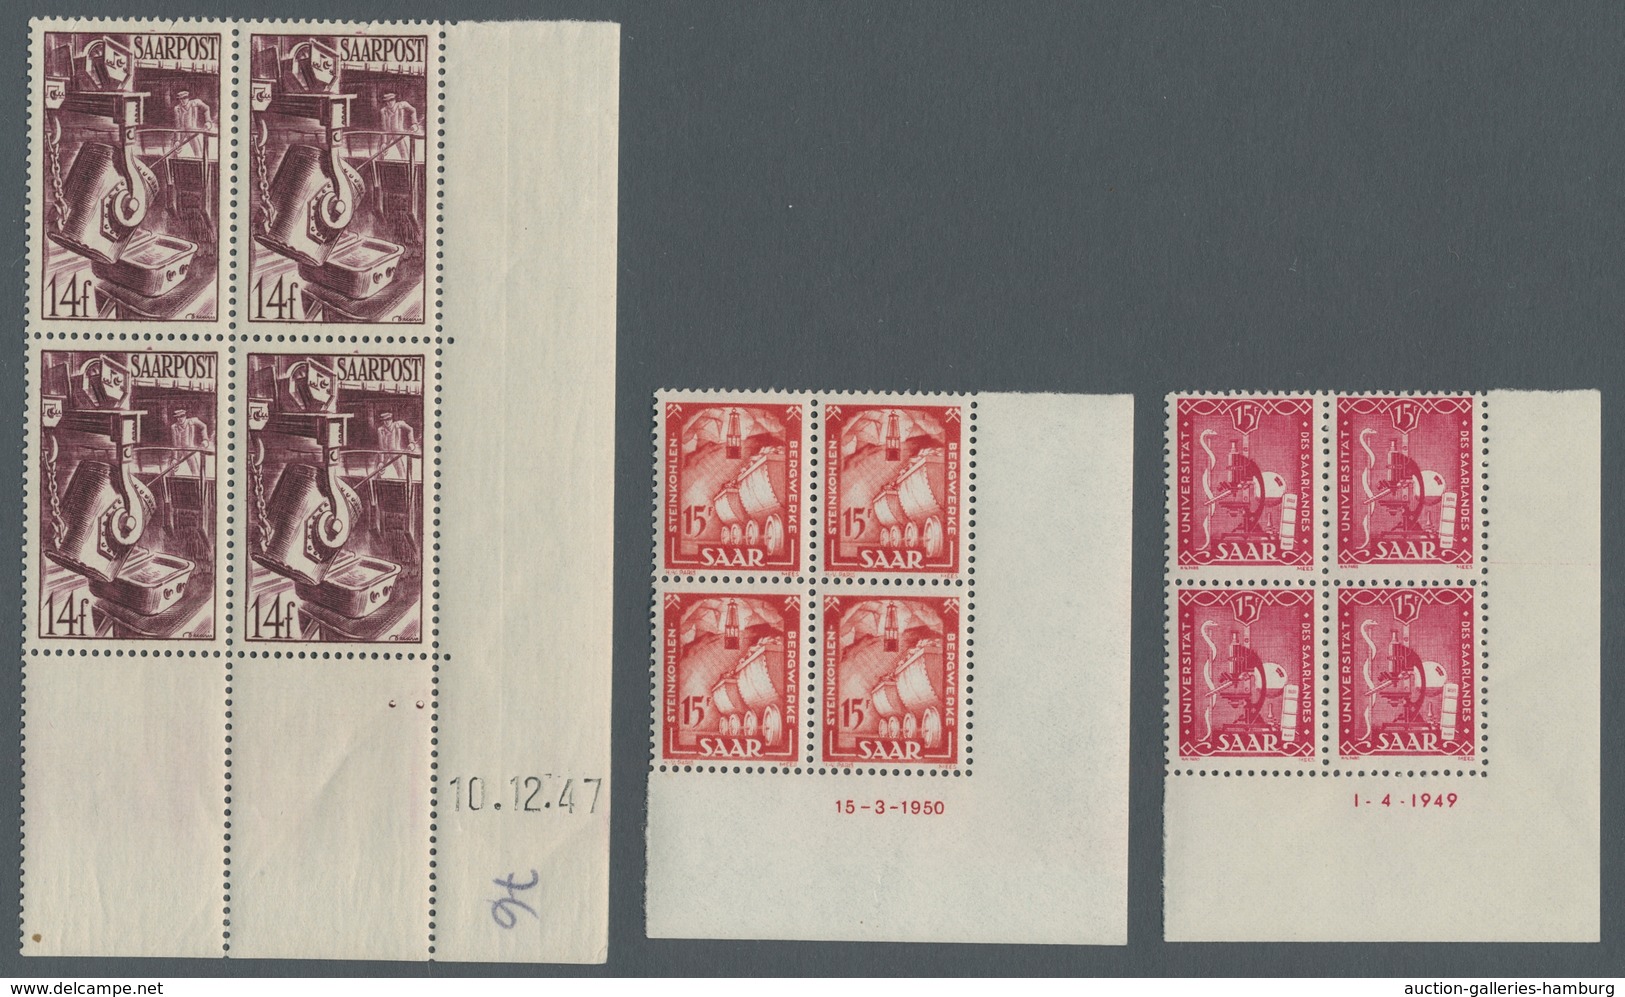 Saarland (1947/56): 1948, "Saar III", dreizehn postfrische Eckrandviererblocks mit Druckdatum in pra